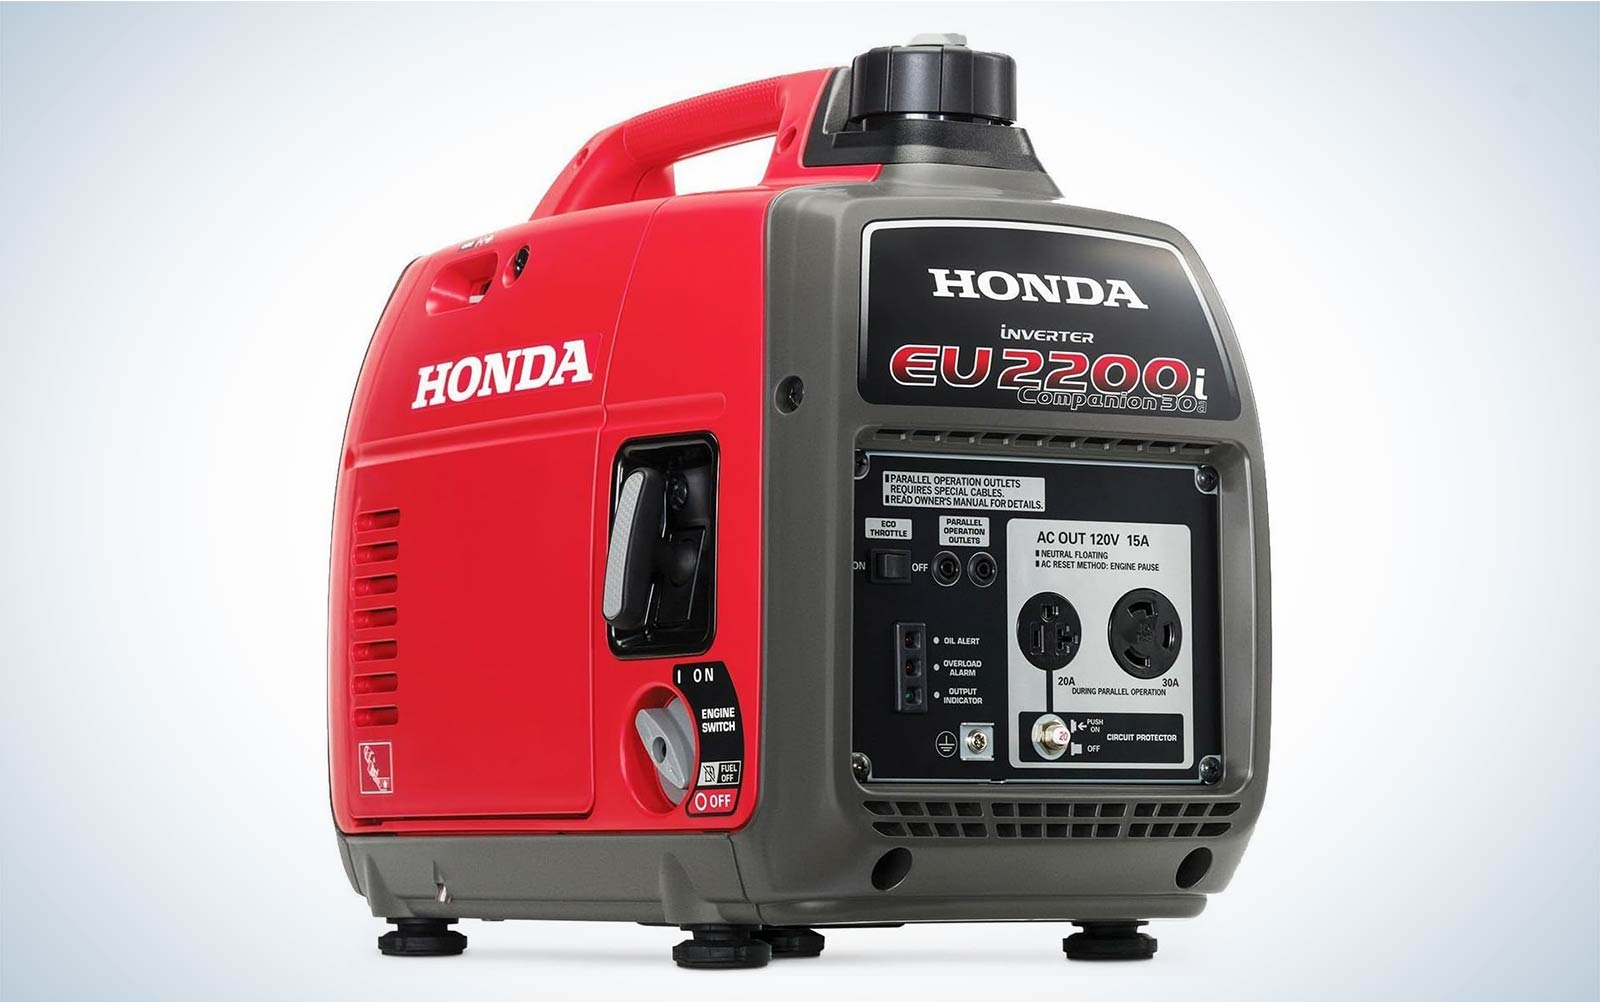 Honda EU2200i Companion Portable Generator on a plain background